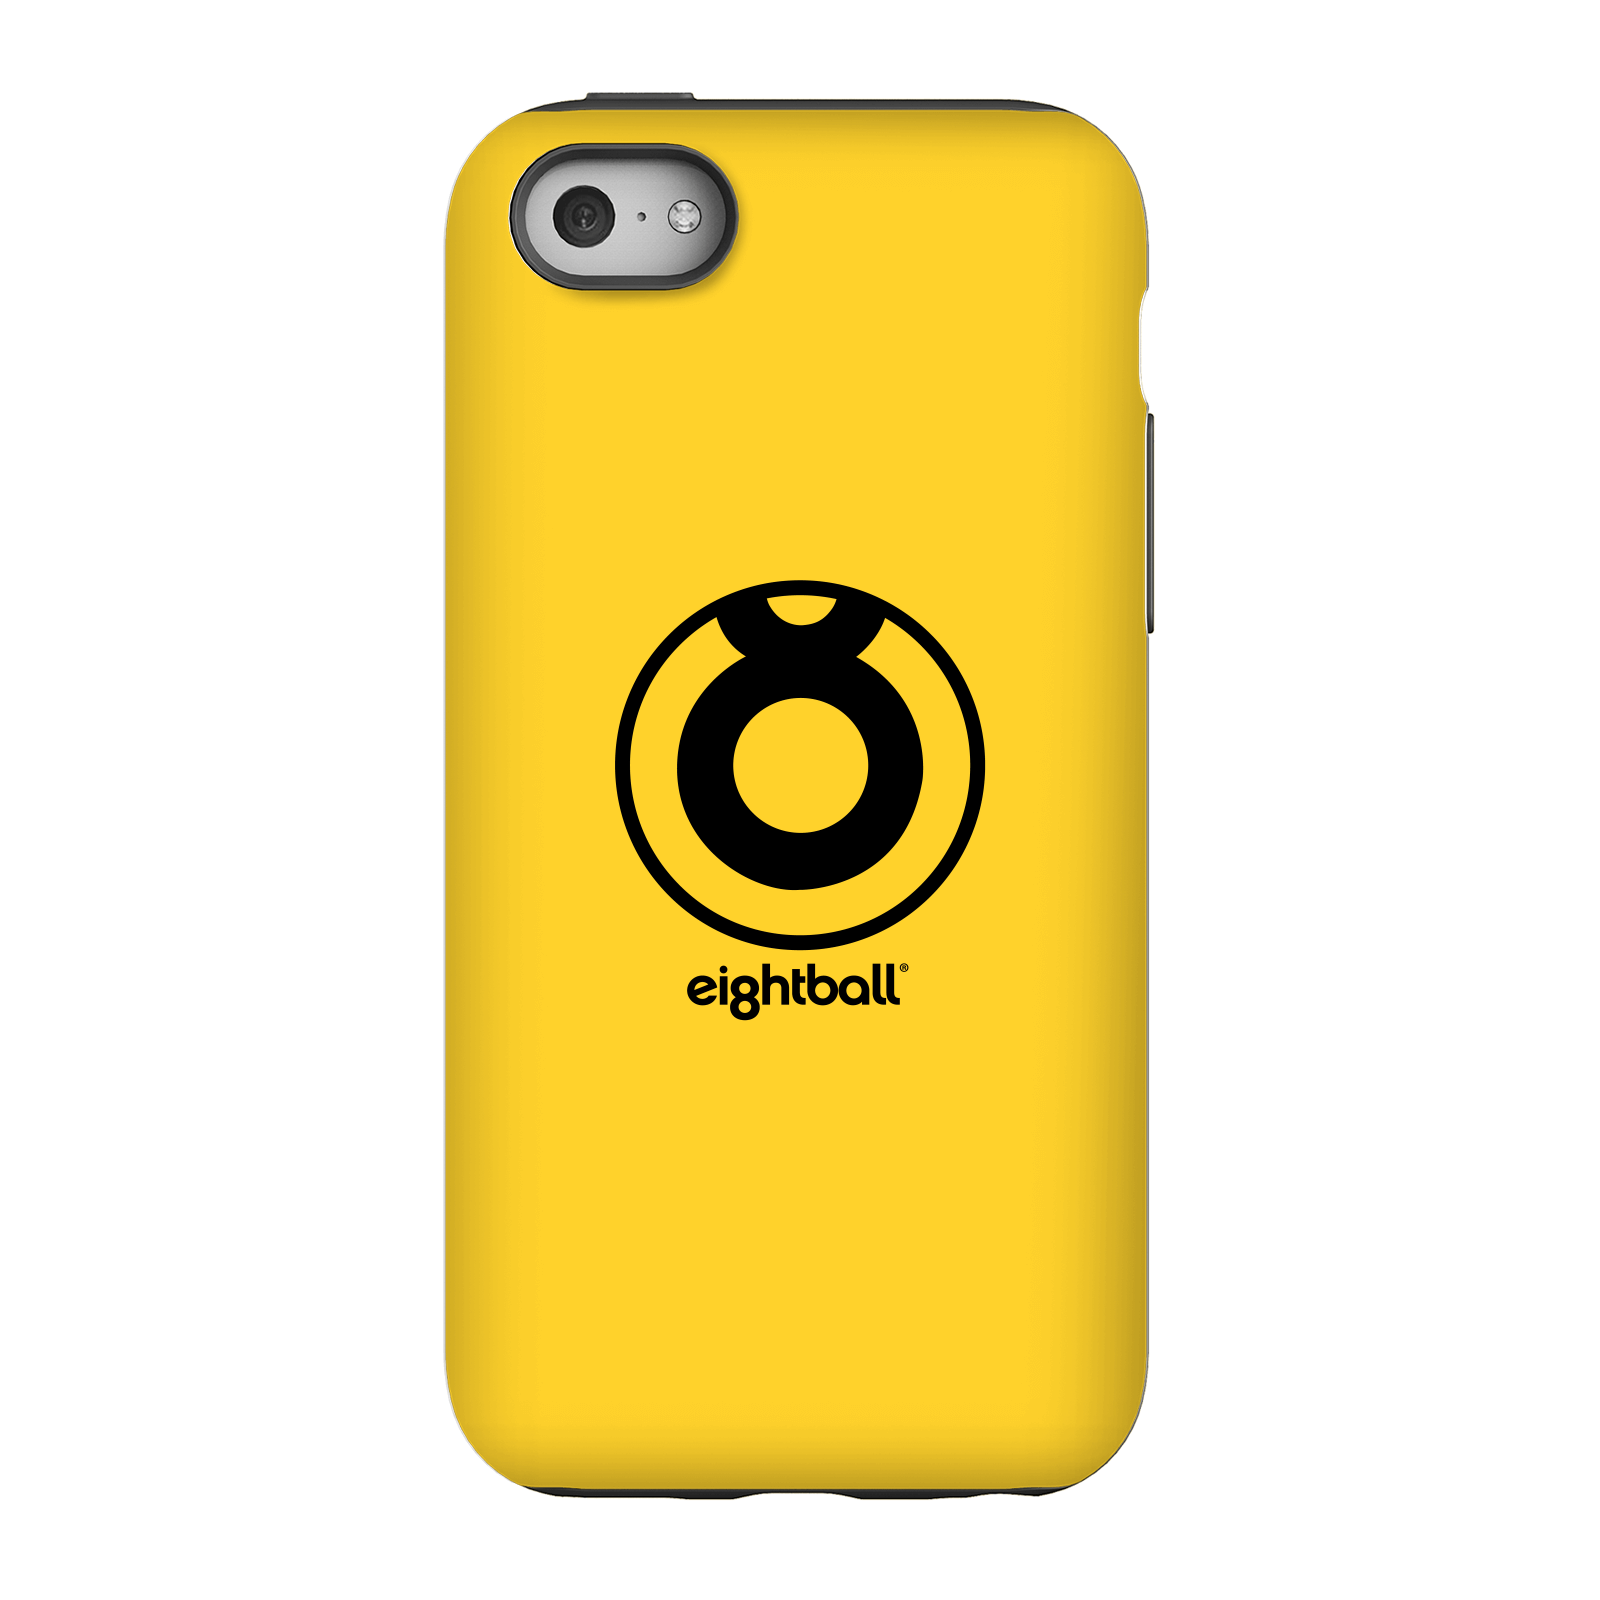 Funda Móvil Ei8htball Large Circle Logo para iPhone y Android - iPhone 5C - Carcasa doble capa - Mate